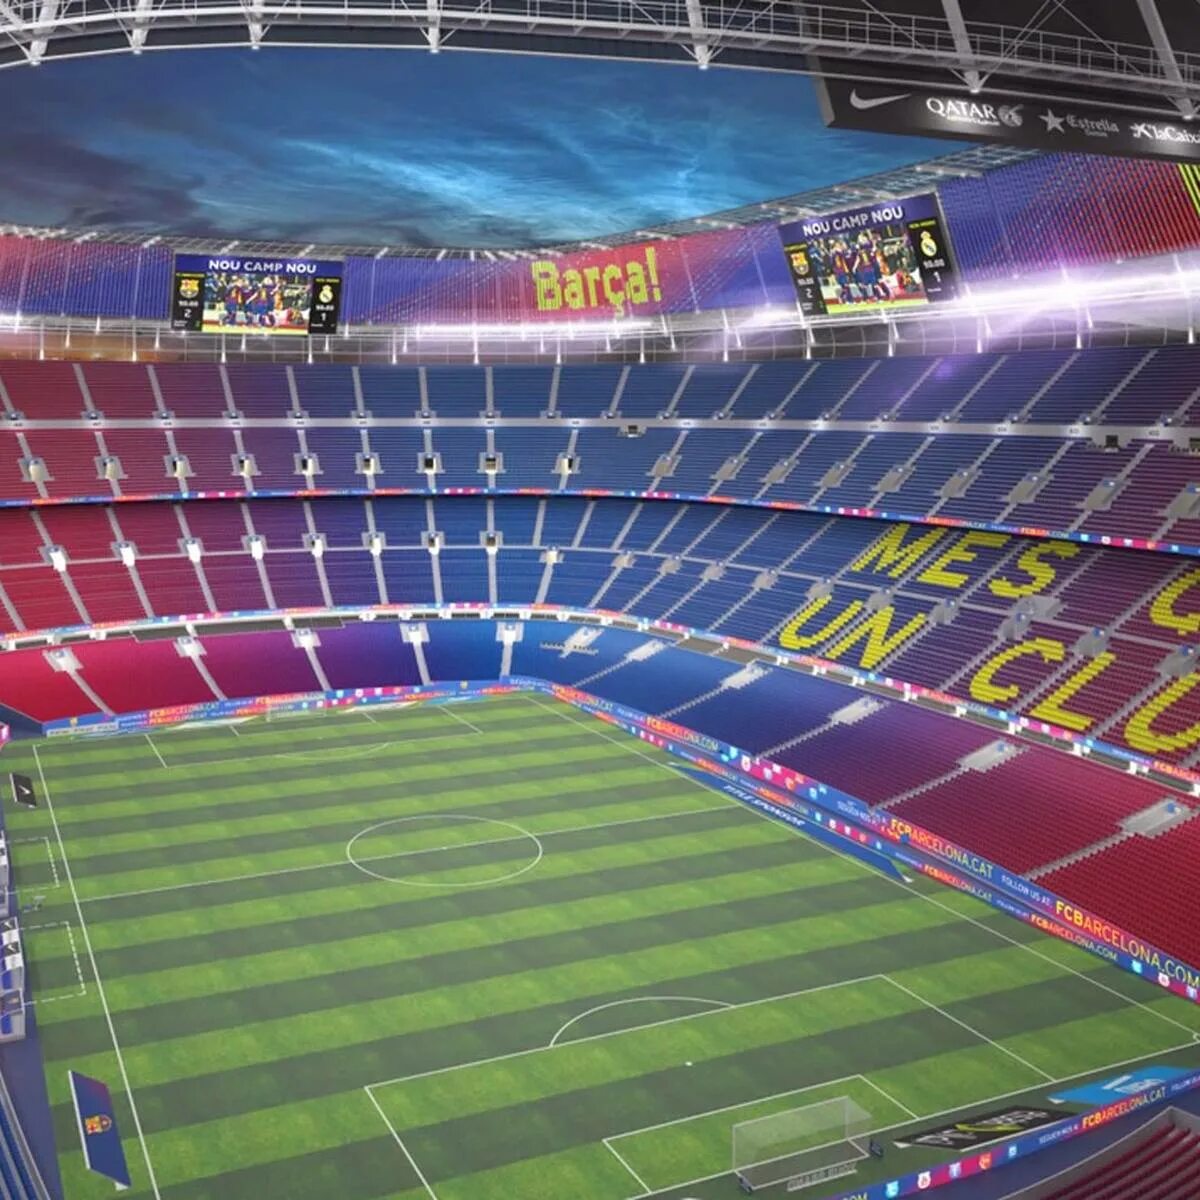 ФК Барселона стадион Камп ноу. Стадион Барселоны 2021. Реконструкция стадиона Камп ноу в Барселоне. Стадион Камп ноу после реконструкции. Камп нов